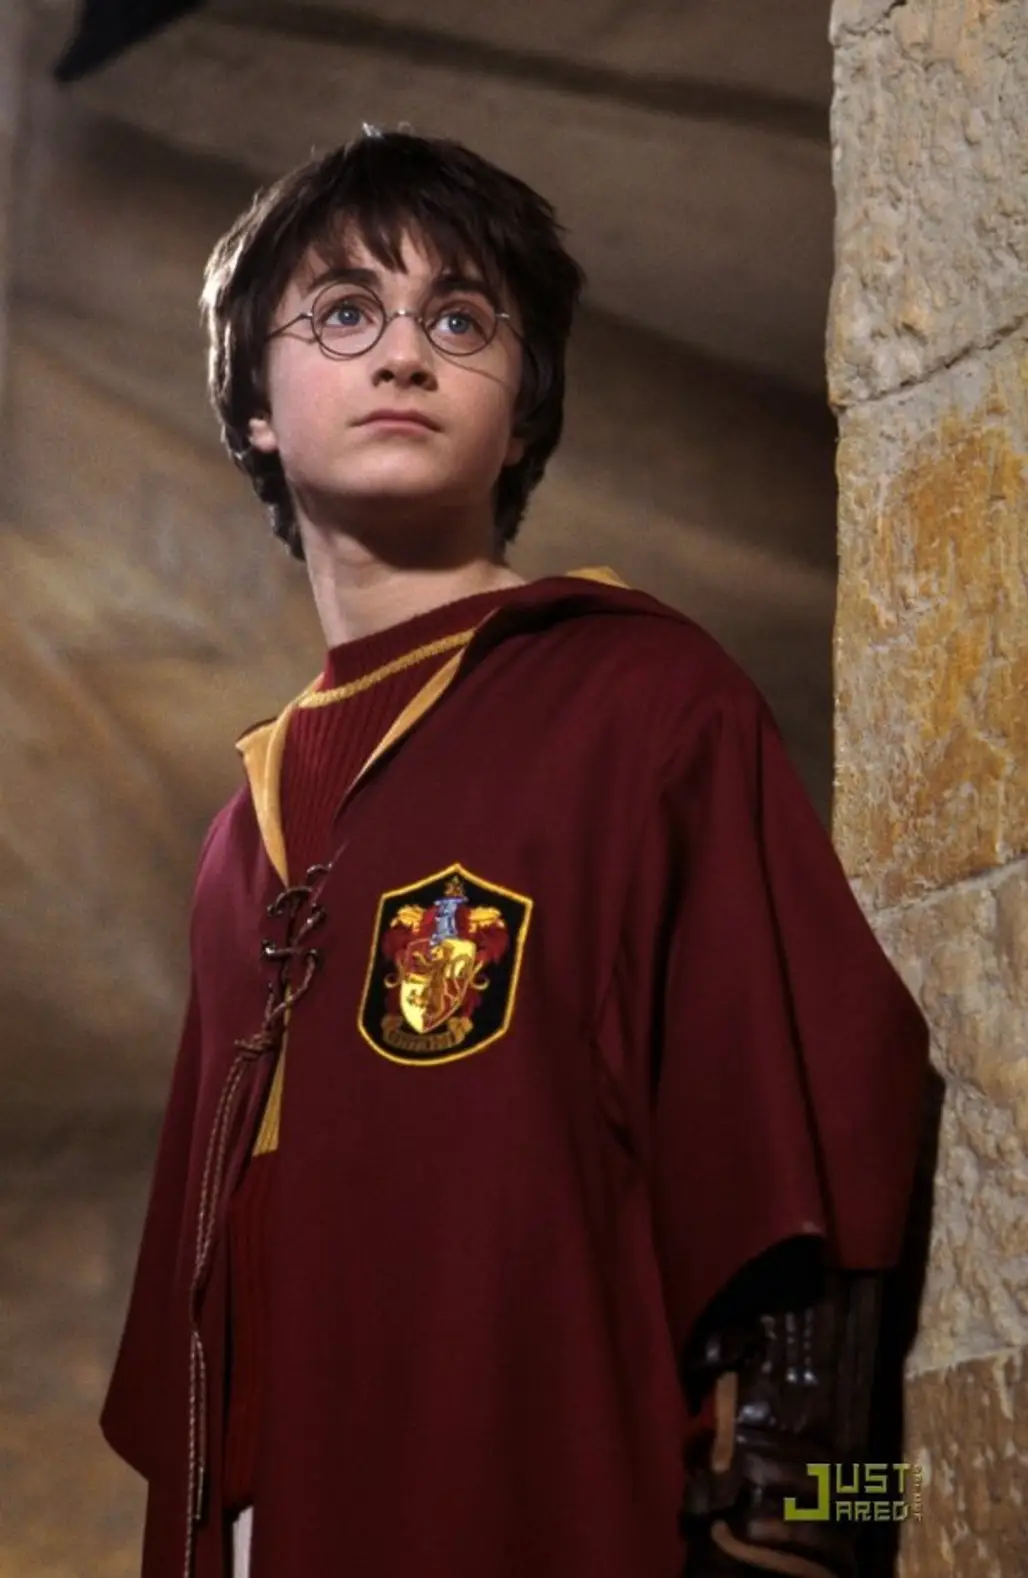 Harry Potter then